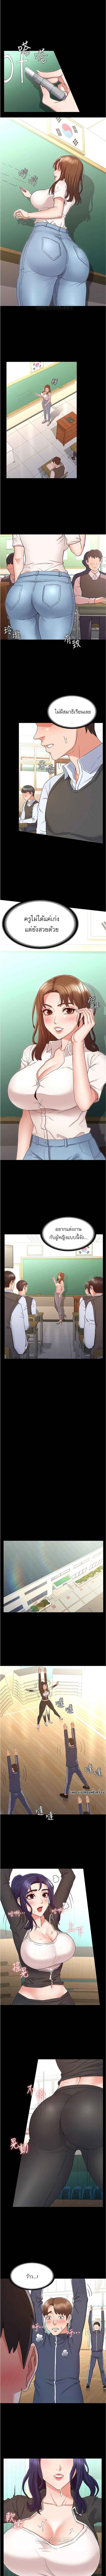 Teacher punishment1